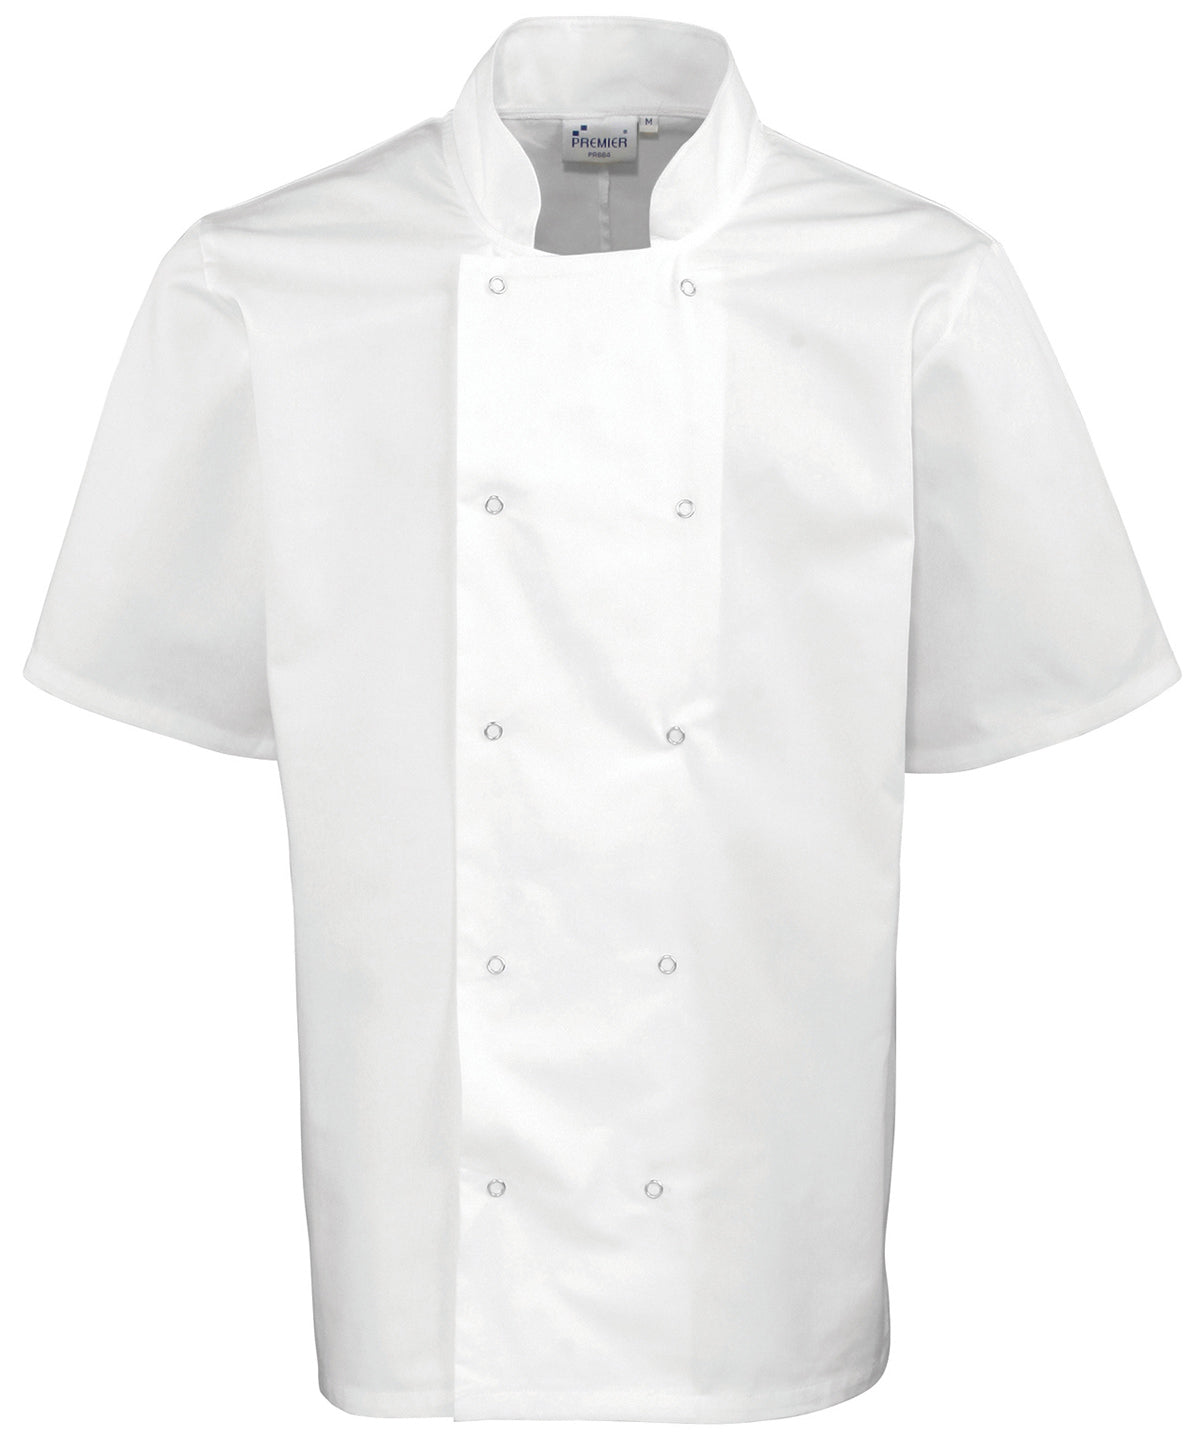 Kokkajakkar - Studded Front Short Sleeve Chef's Jacket